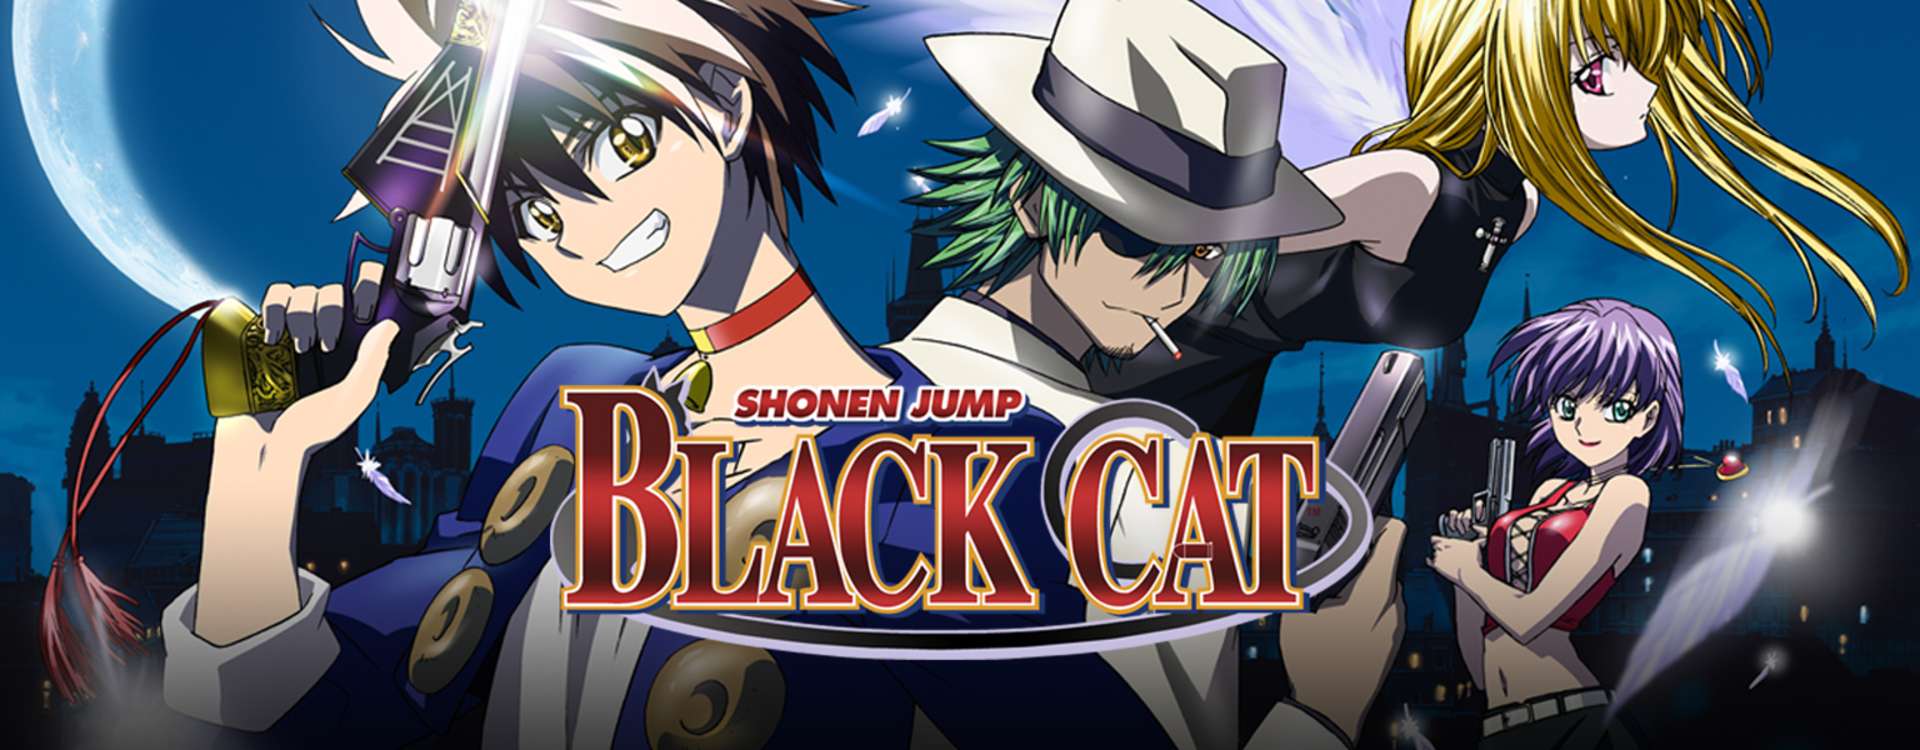 Black Cat Episode 1 English Sub Download